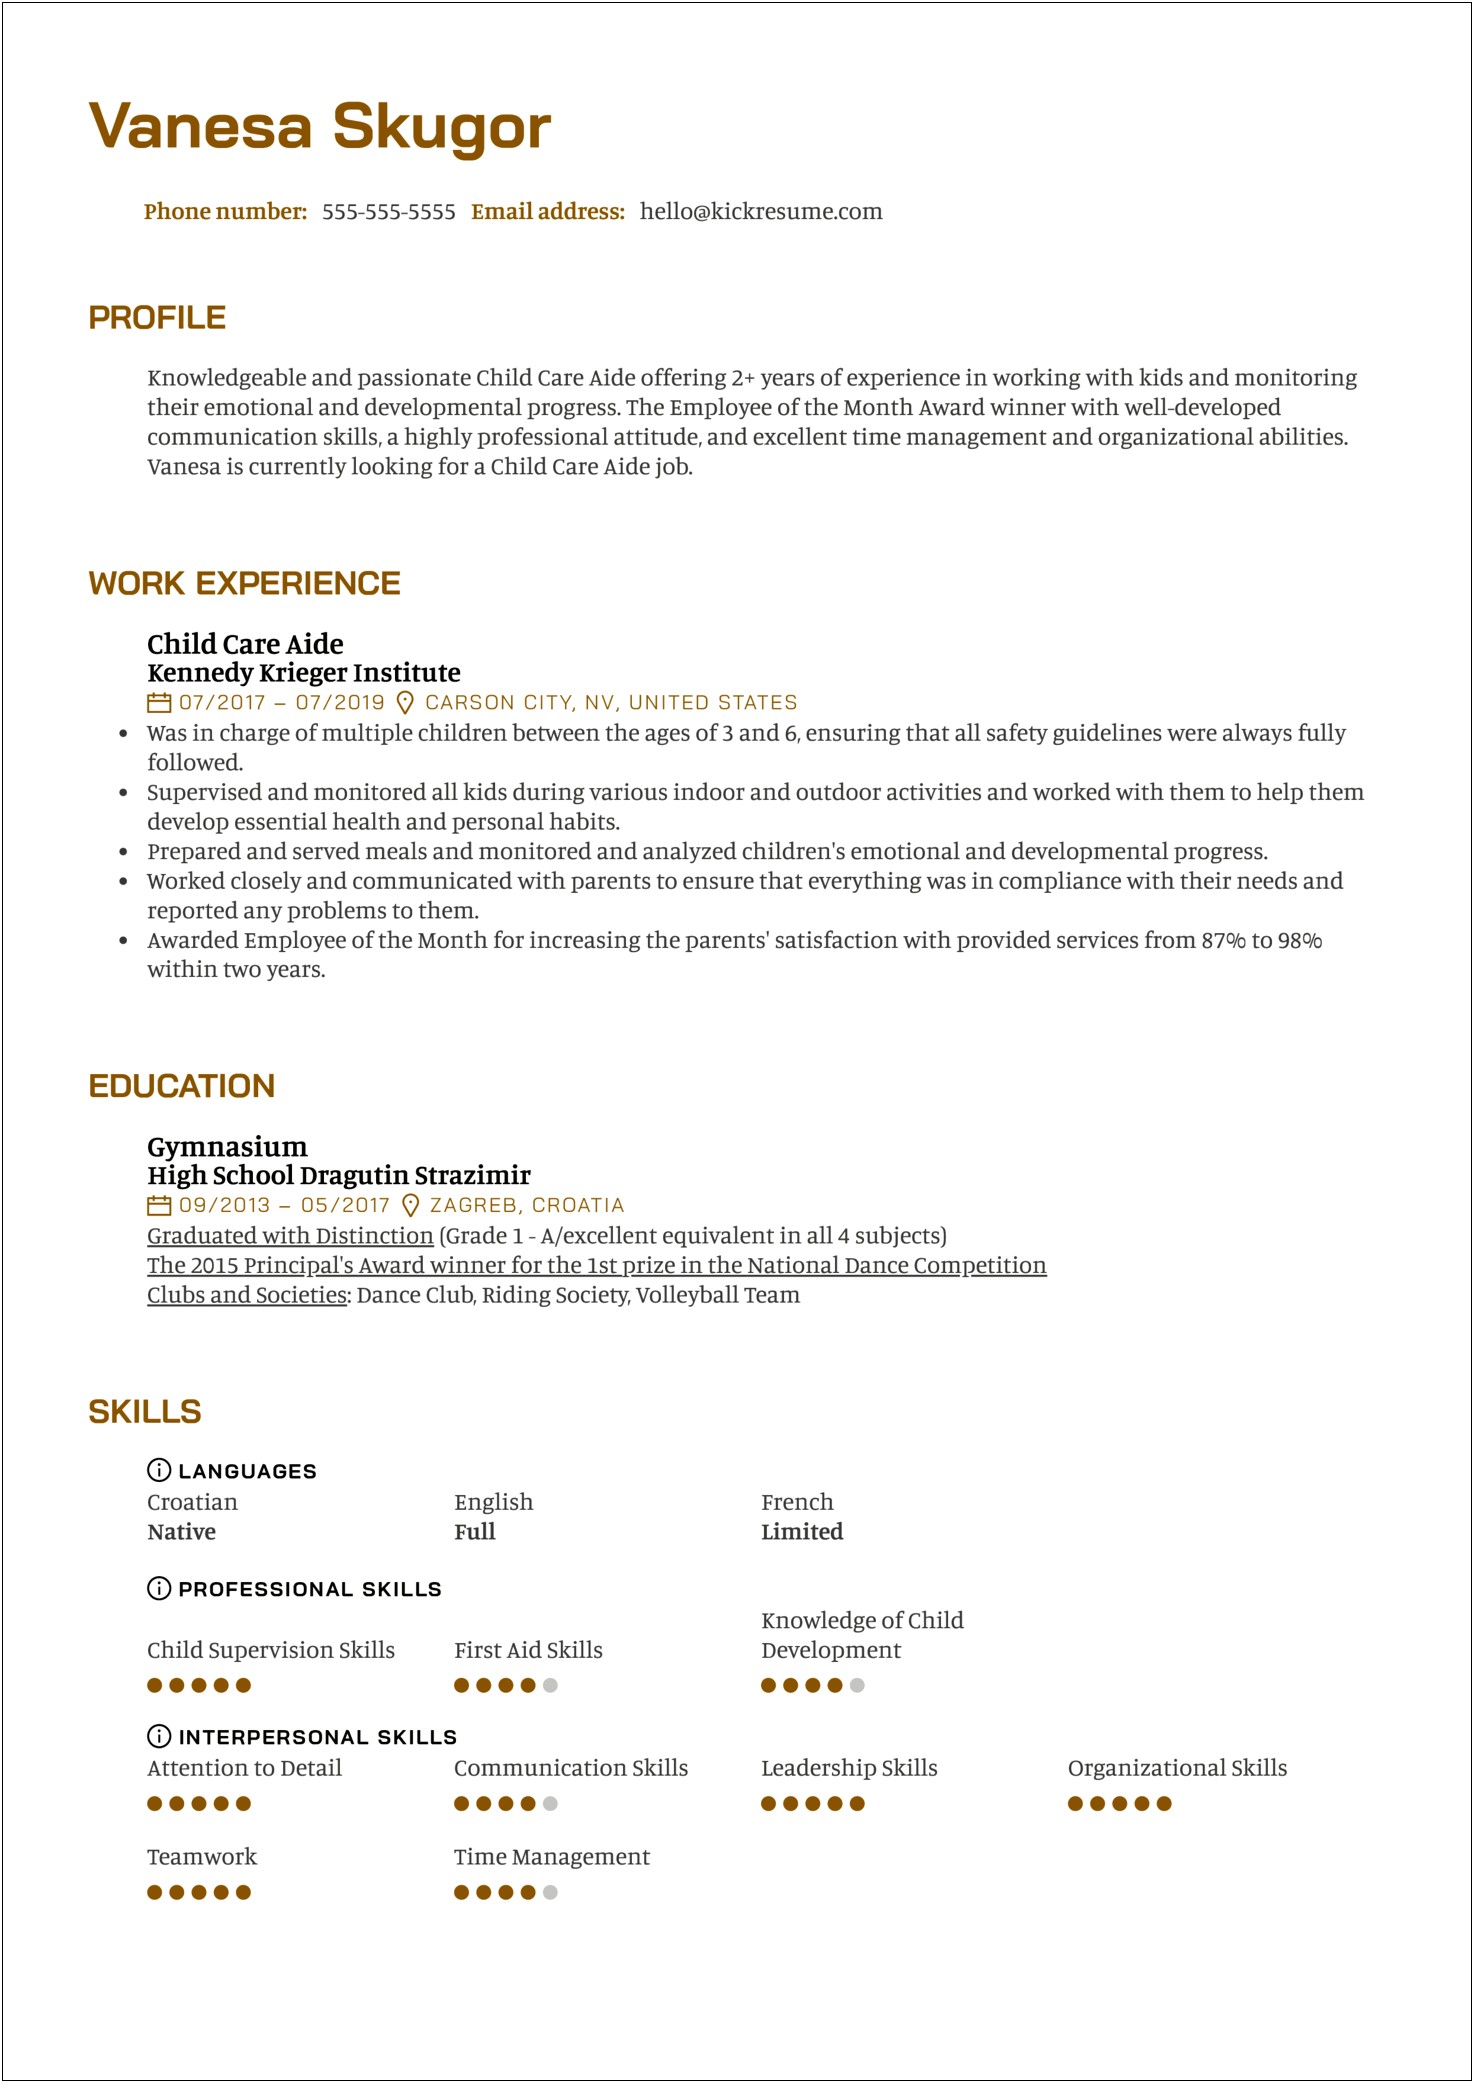 Child Care Worker Description For Resume